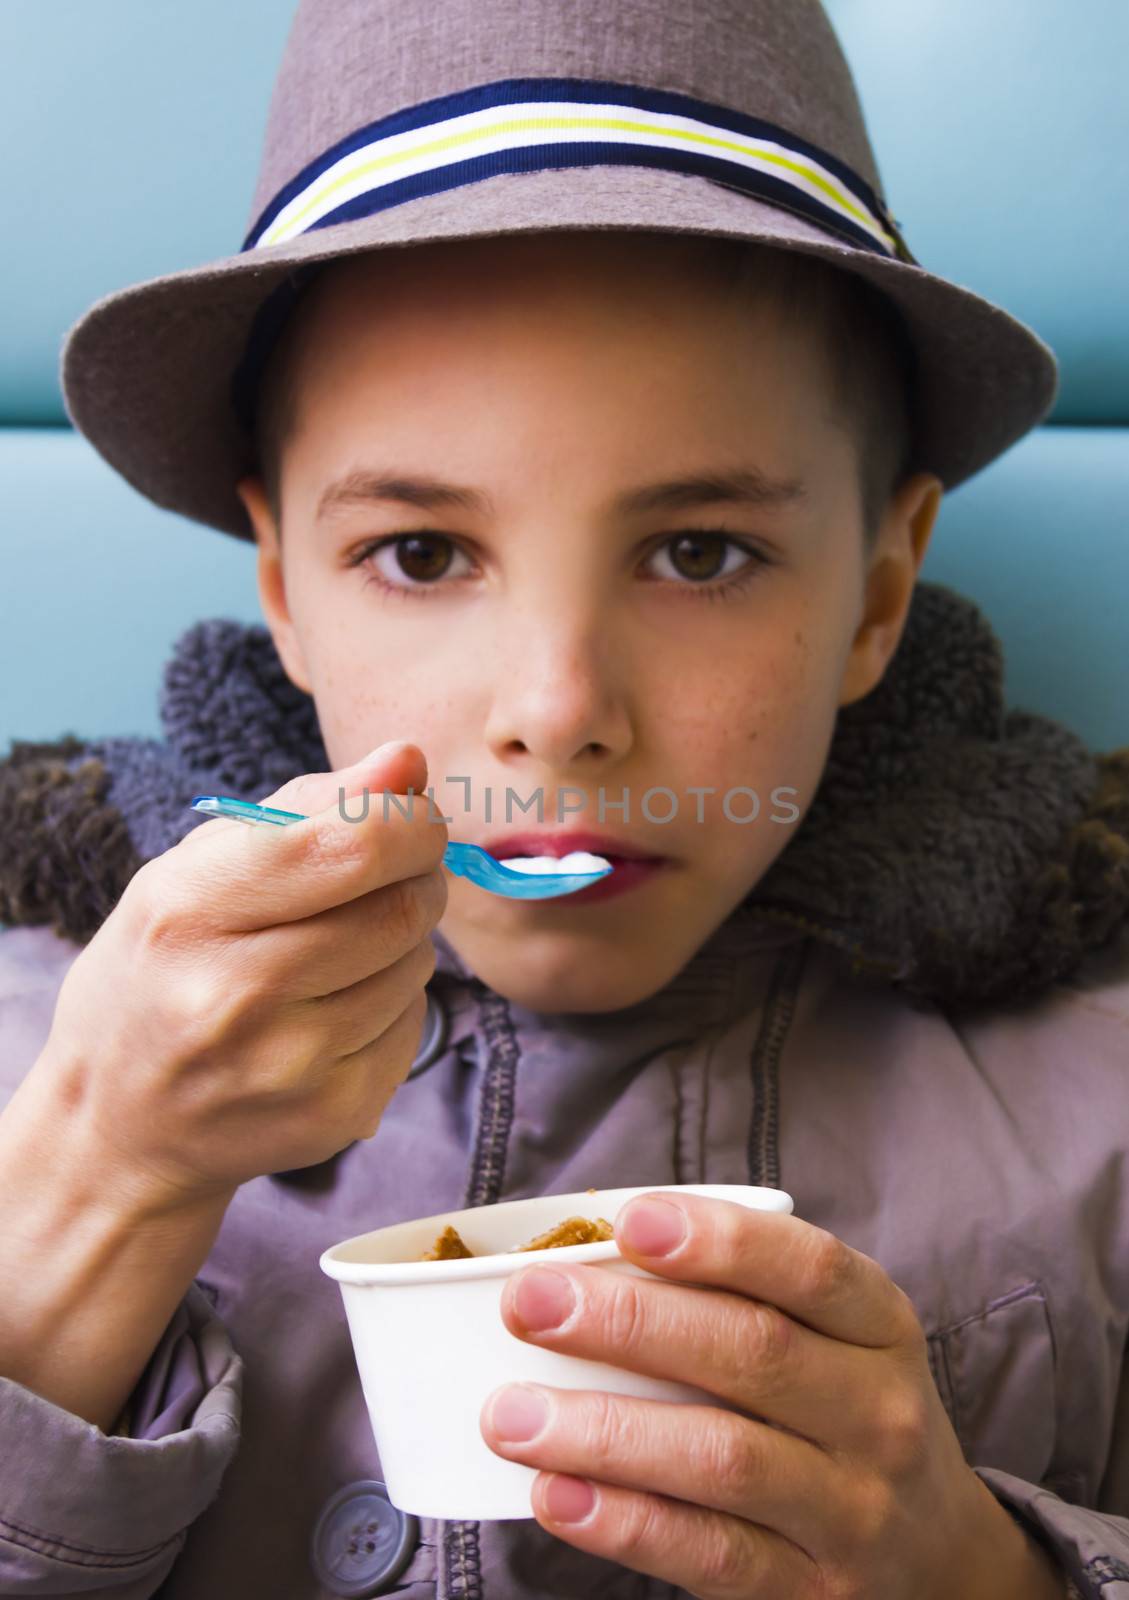 Cute teenage boy eating ice cream with chocolate topping